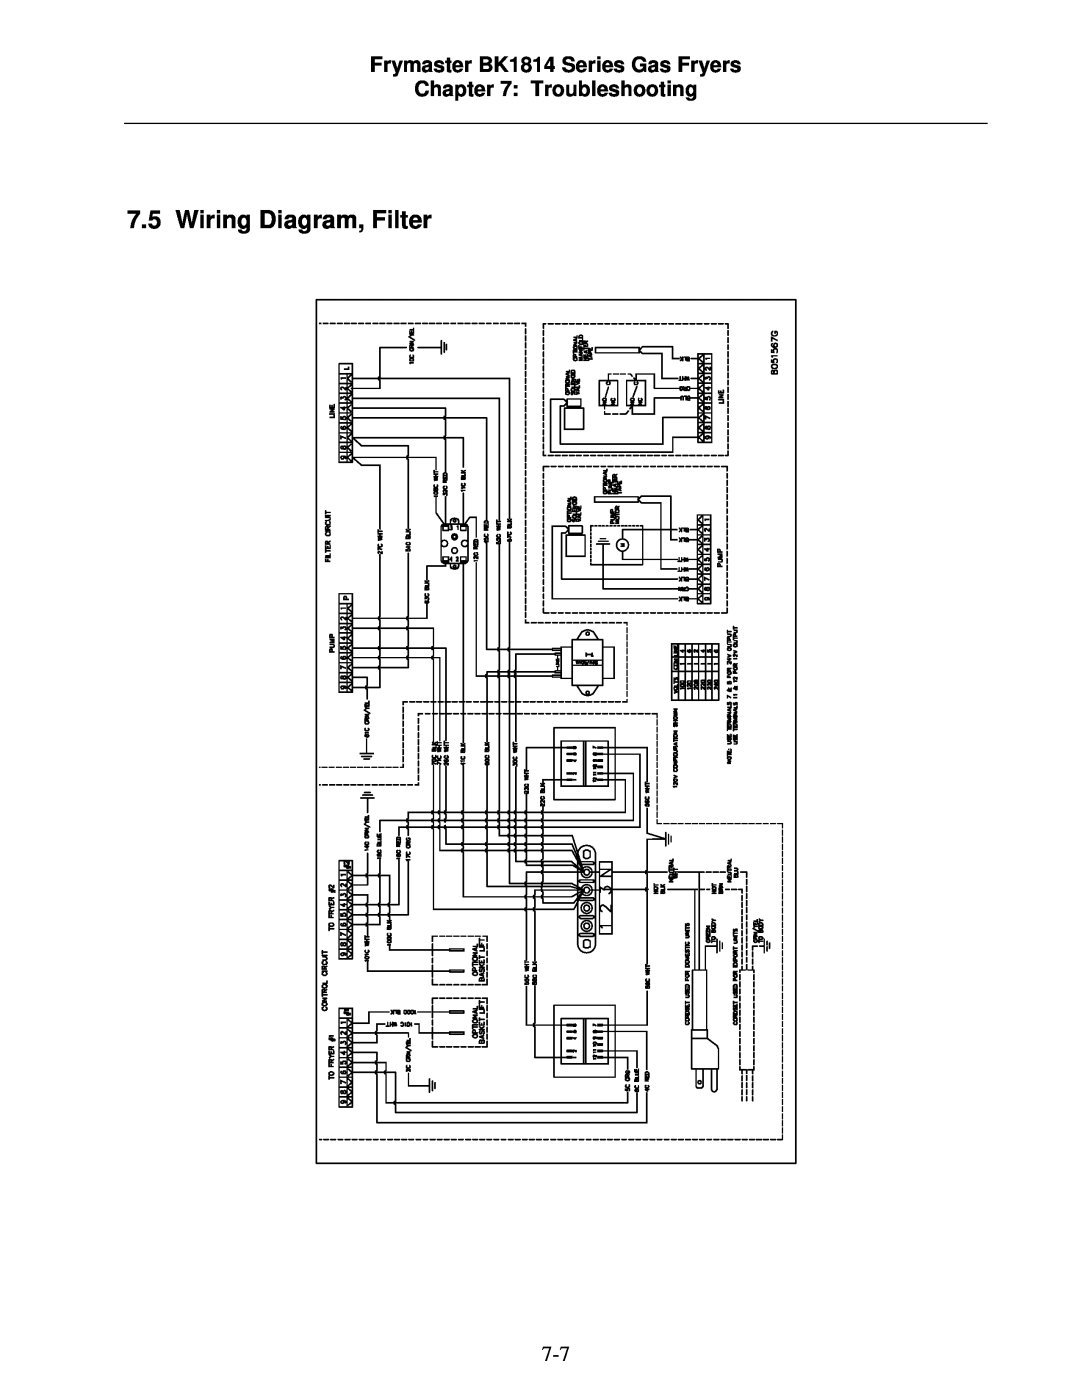 Frymaster operation manual Wiring Diagram, Filter, Frymaster BK1814 Series Gas Fryers Troubleshooting 